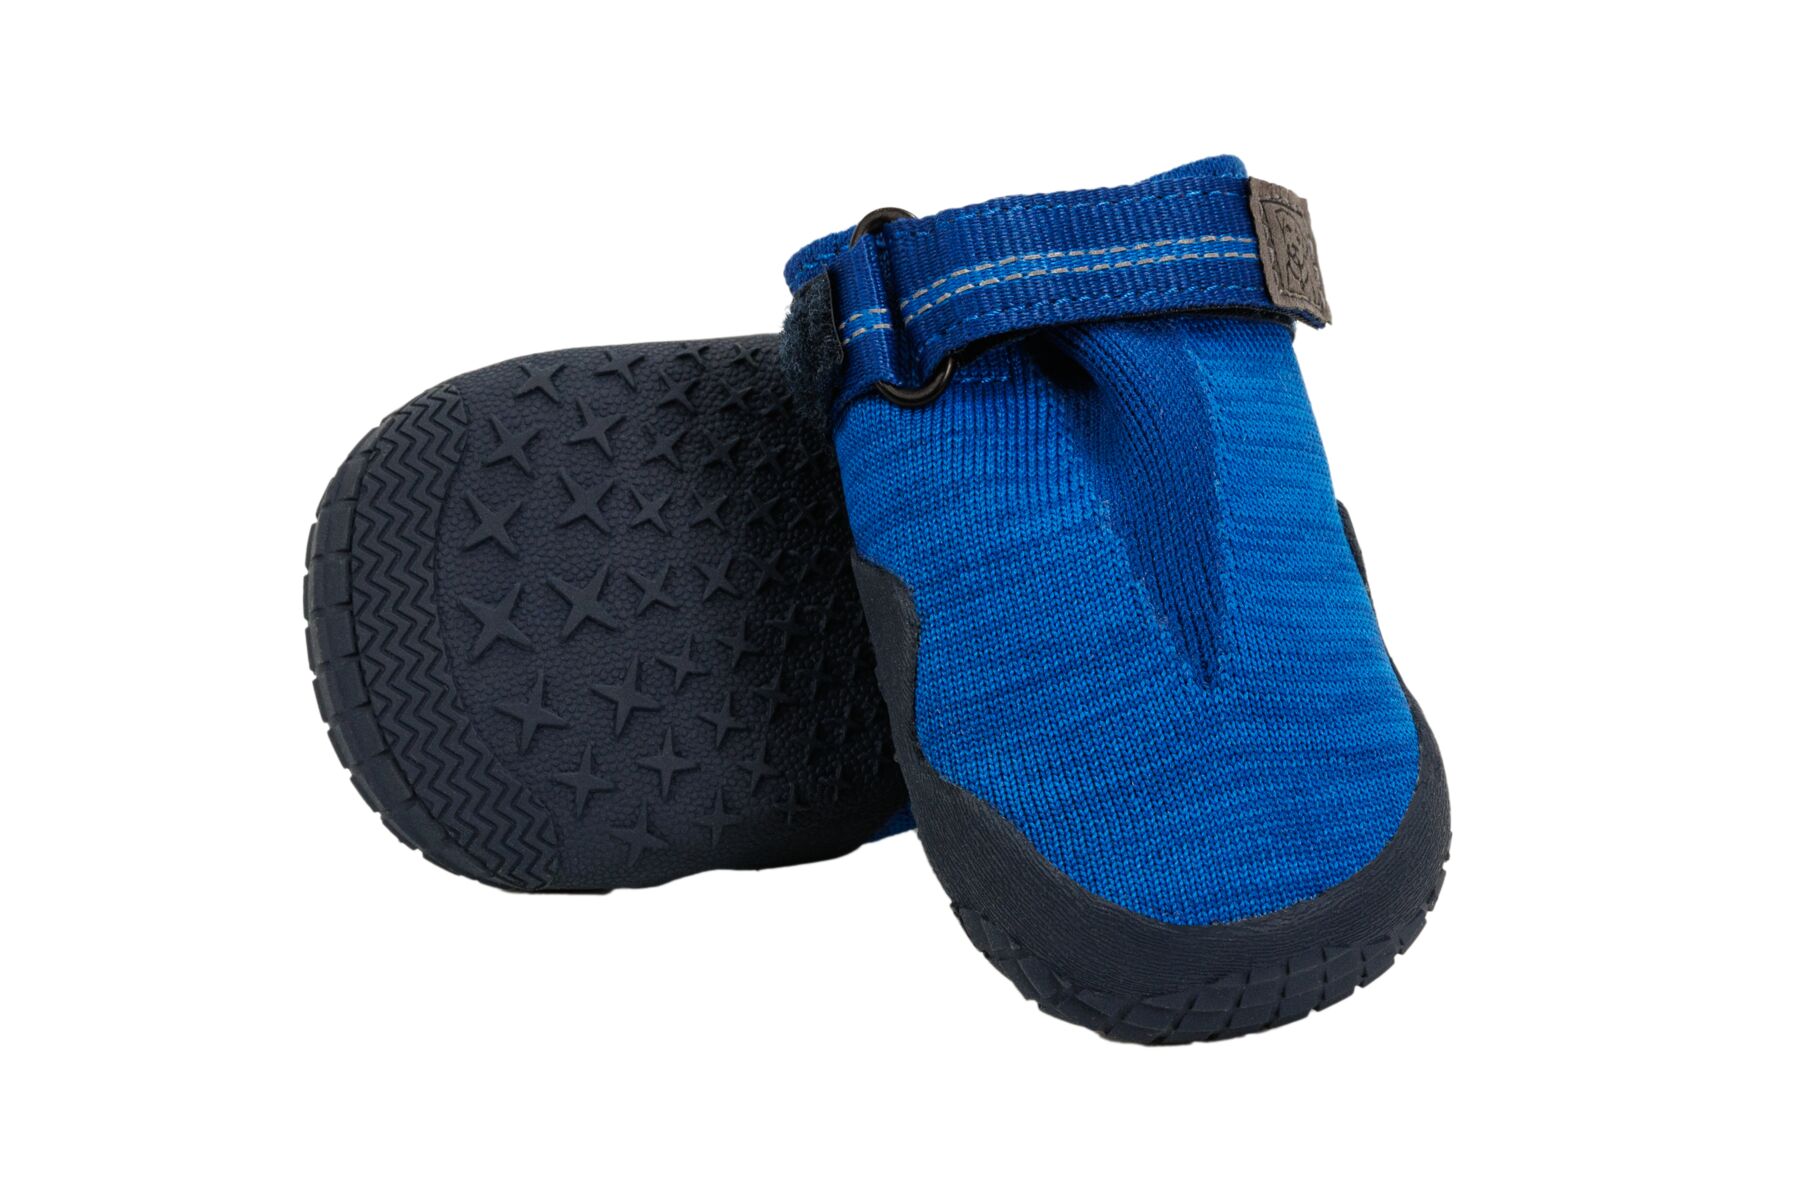 Ruffwear Hi & Light™ Trail Shoes - Blue Pool (76 mm)